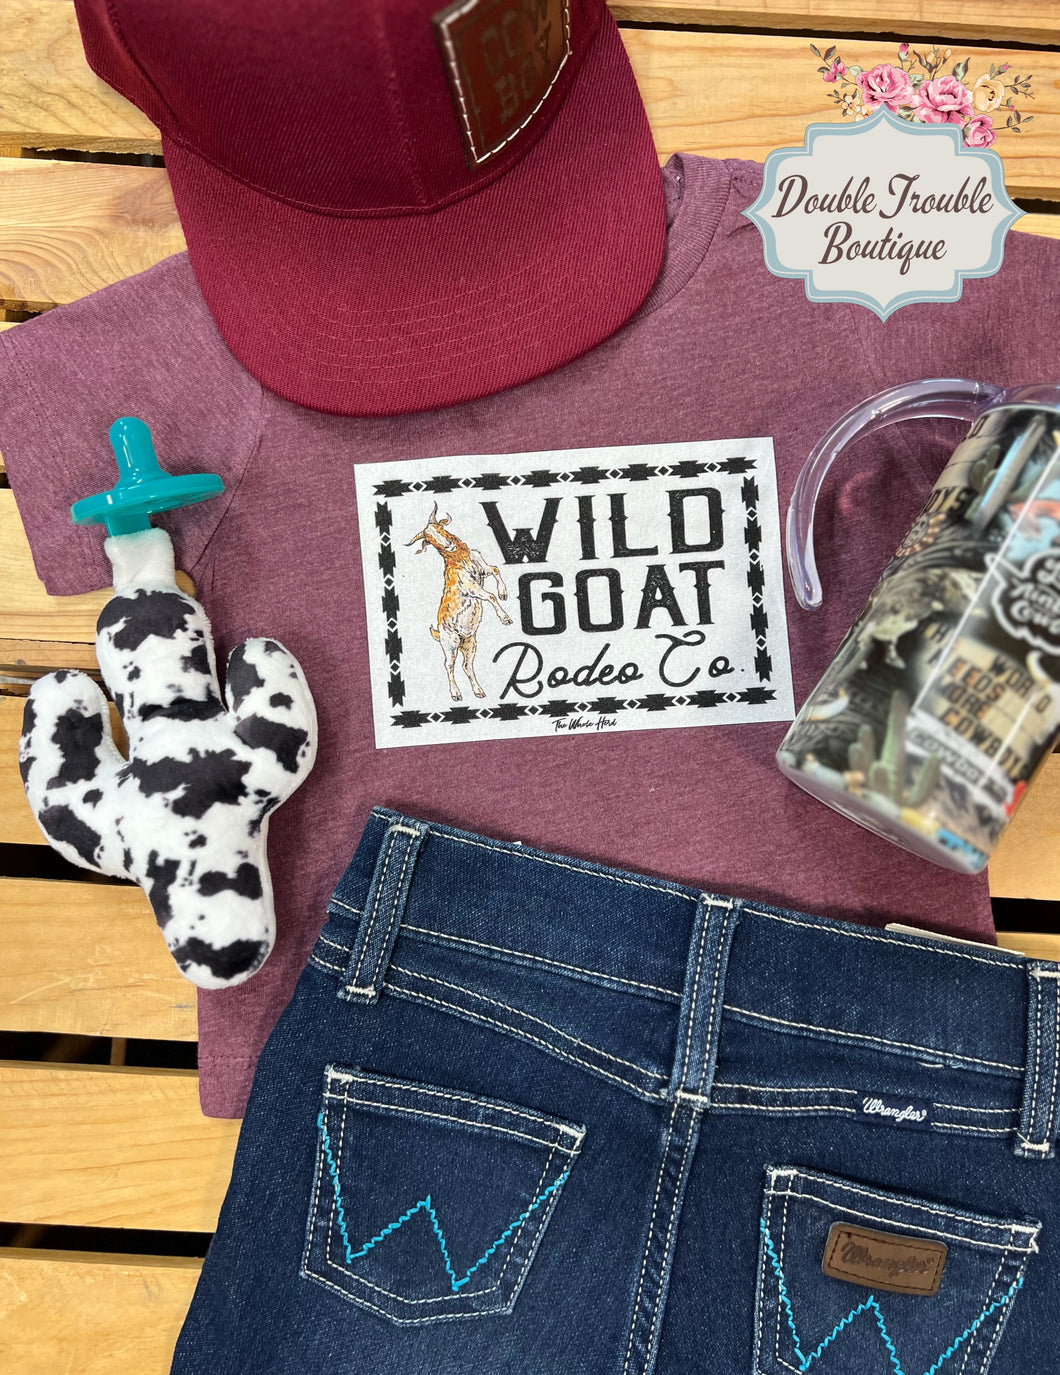 Wild Goat Rodeo Co. Tee